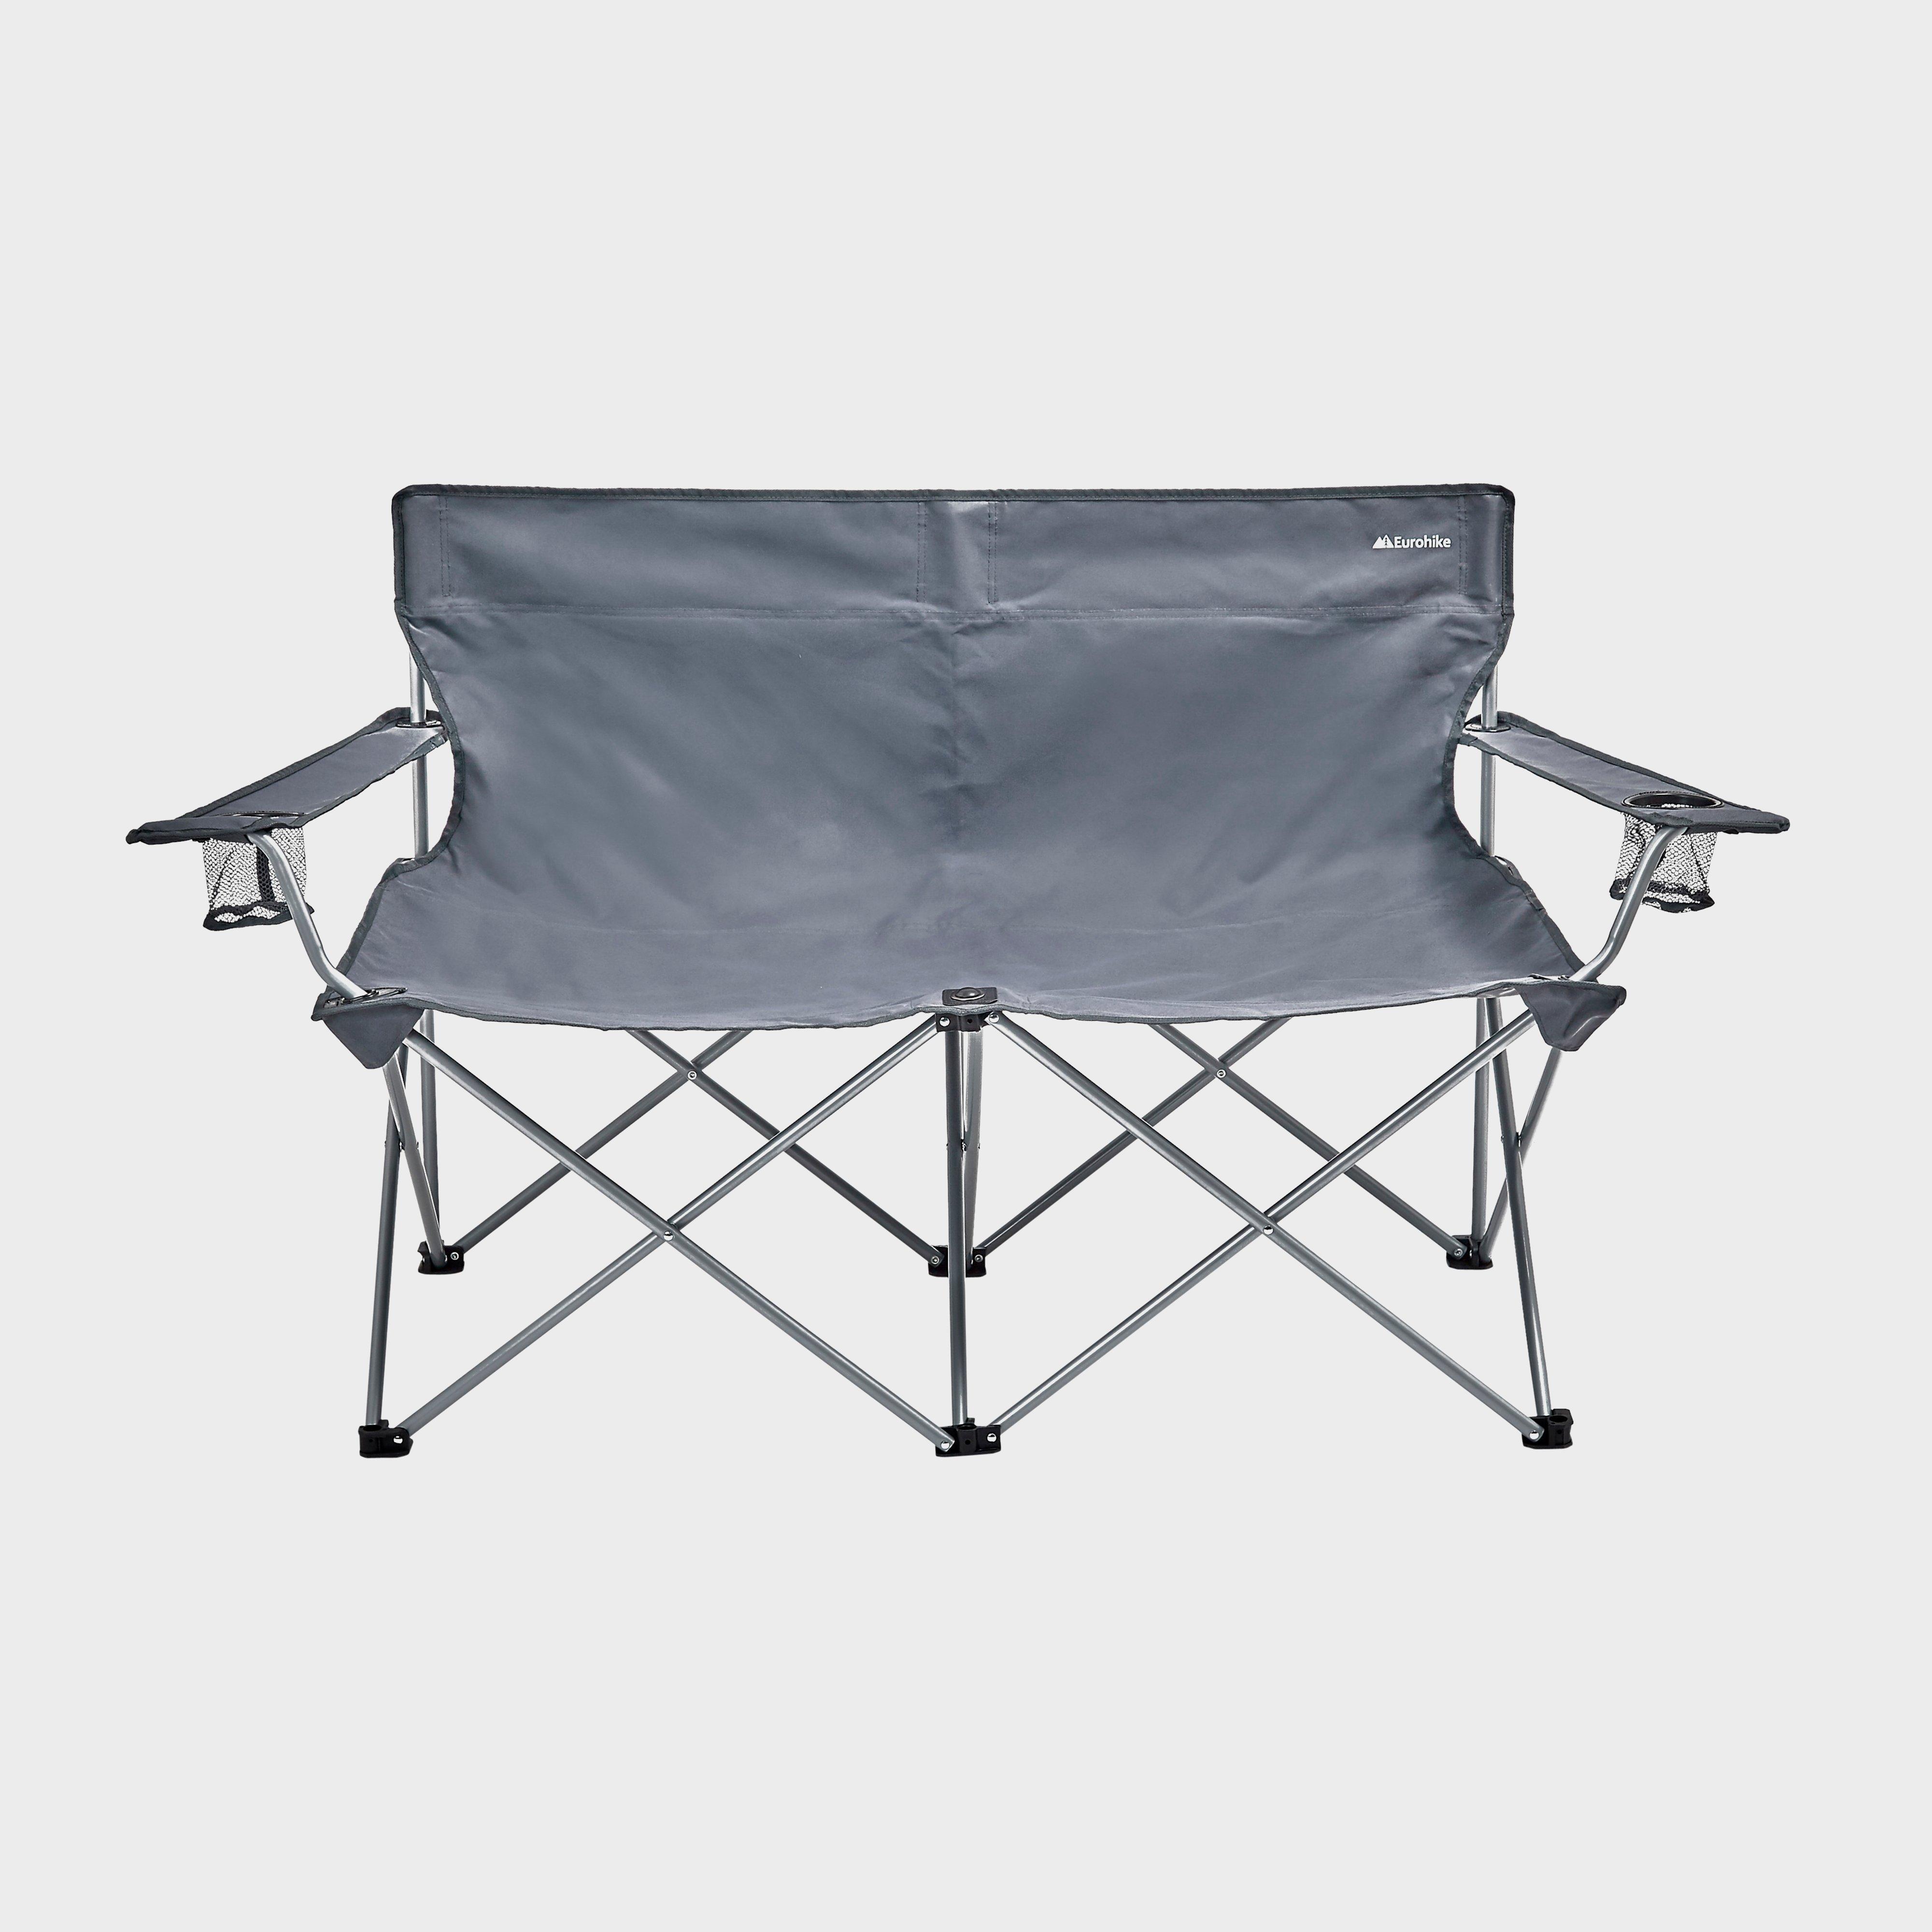  Eurohike Peak Double Chair, Grey